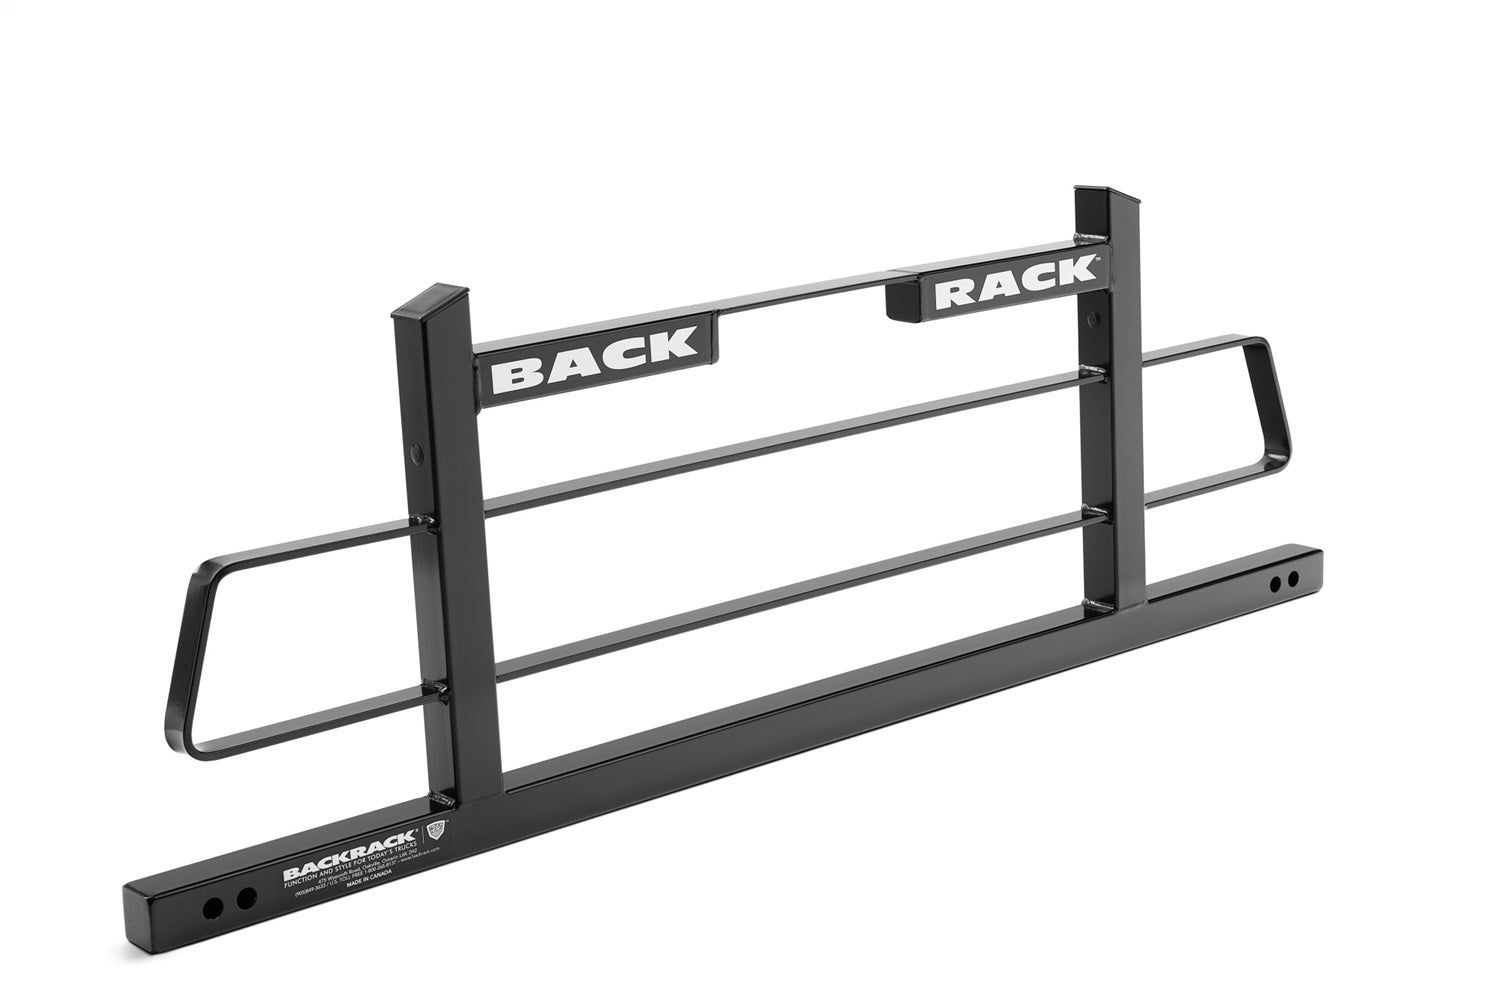 Backrack 15009 Backrack Headache Rack Frame